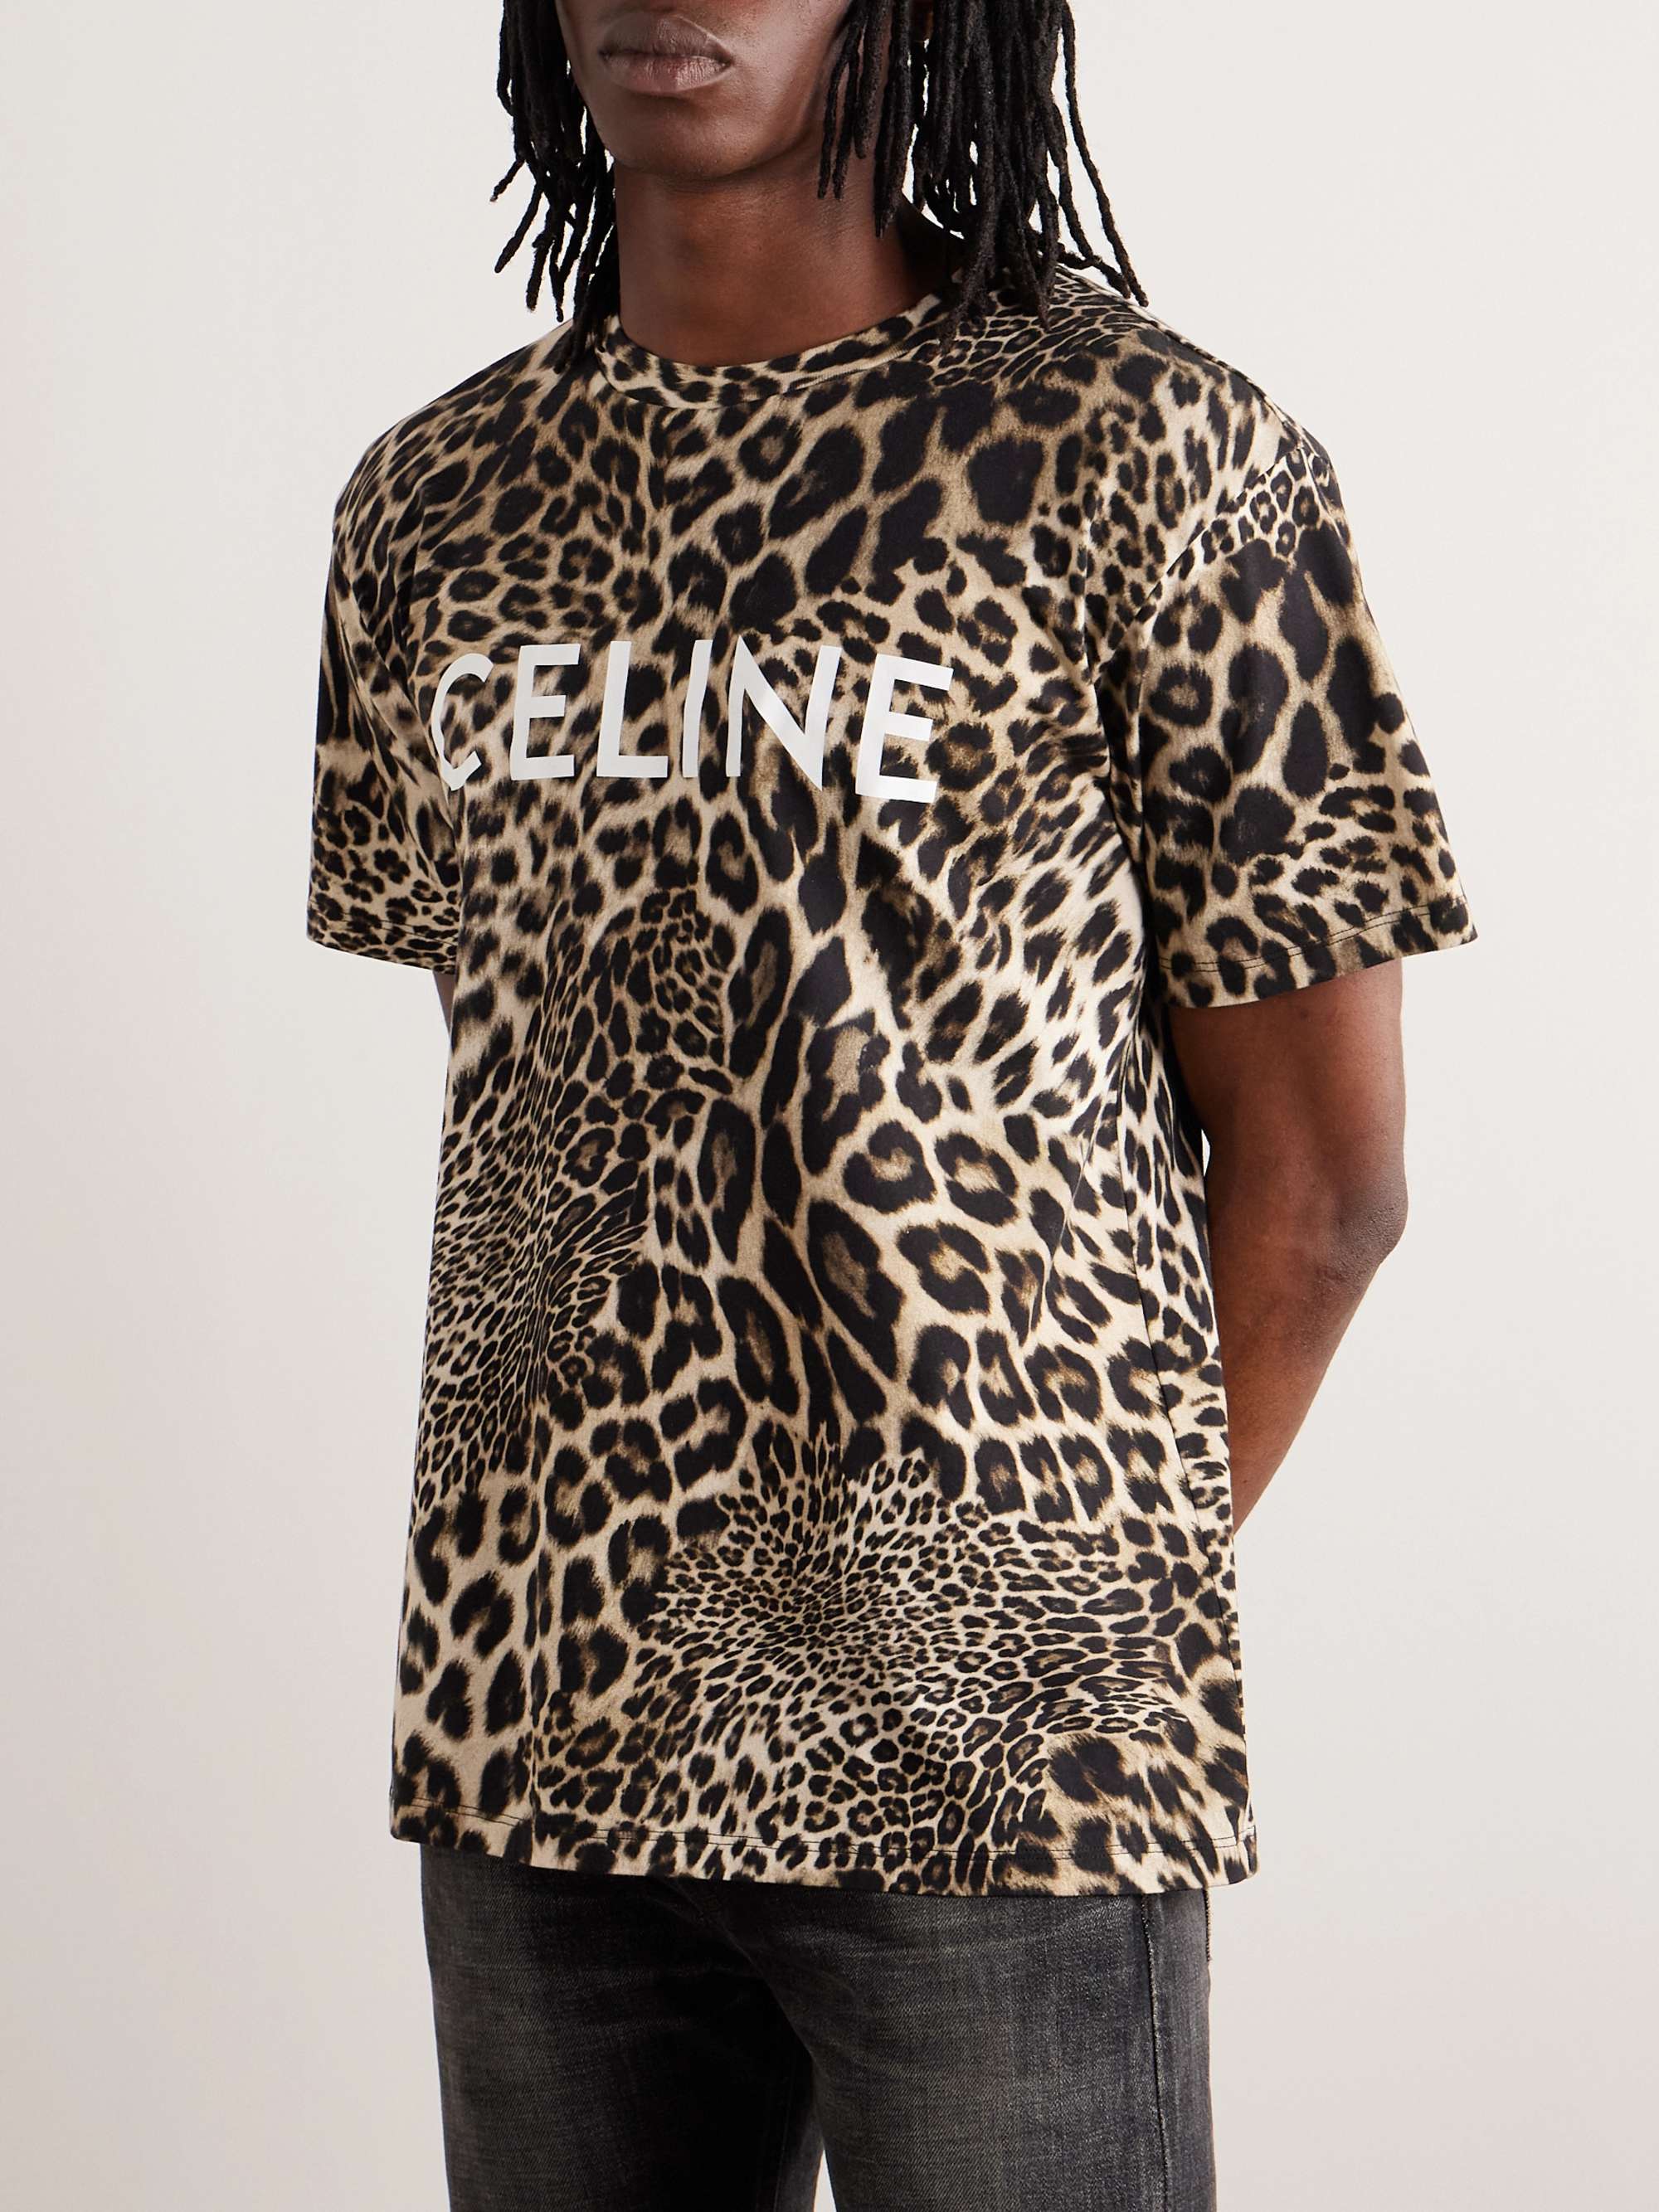 CELINE HOMME Leopard-Print Cotton-Jersey T-Shirt for Men | MR PORTER